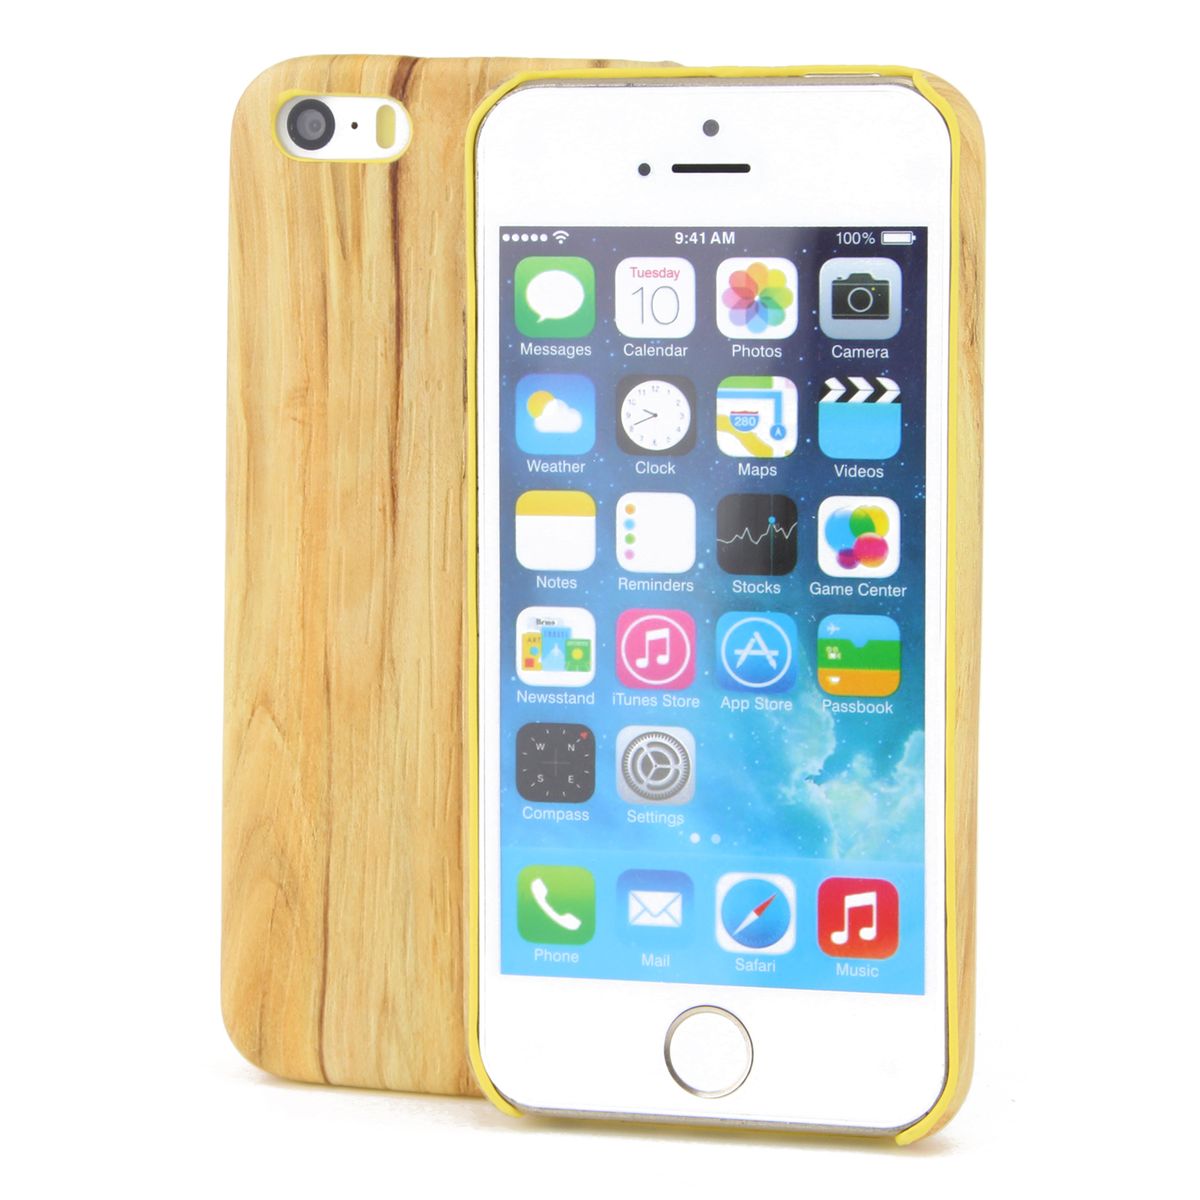 König Design Apple iPhone 7 Plus TPU mobile phone case wood look protective case vintage cover